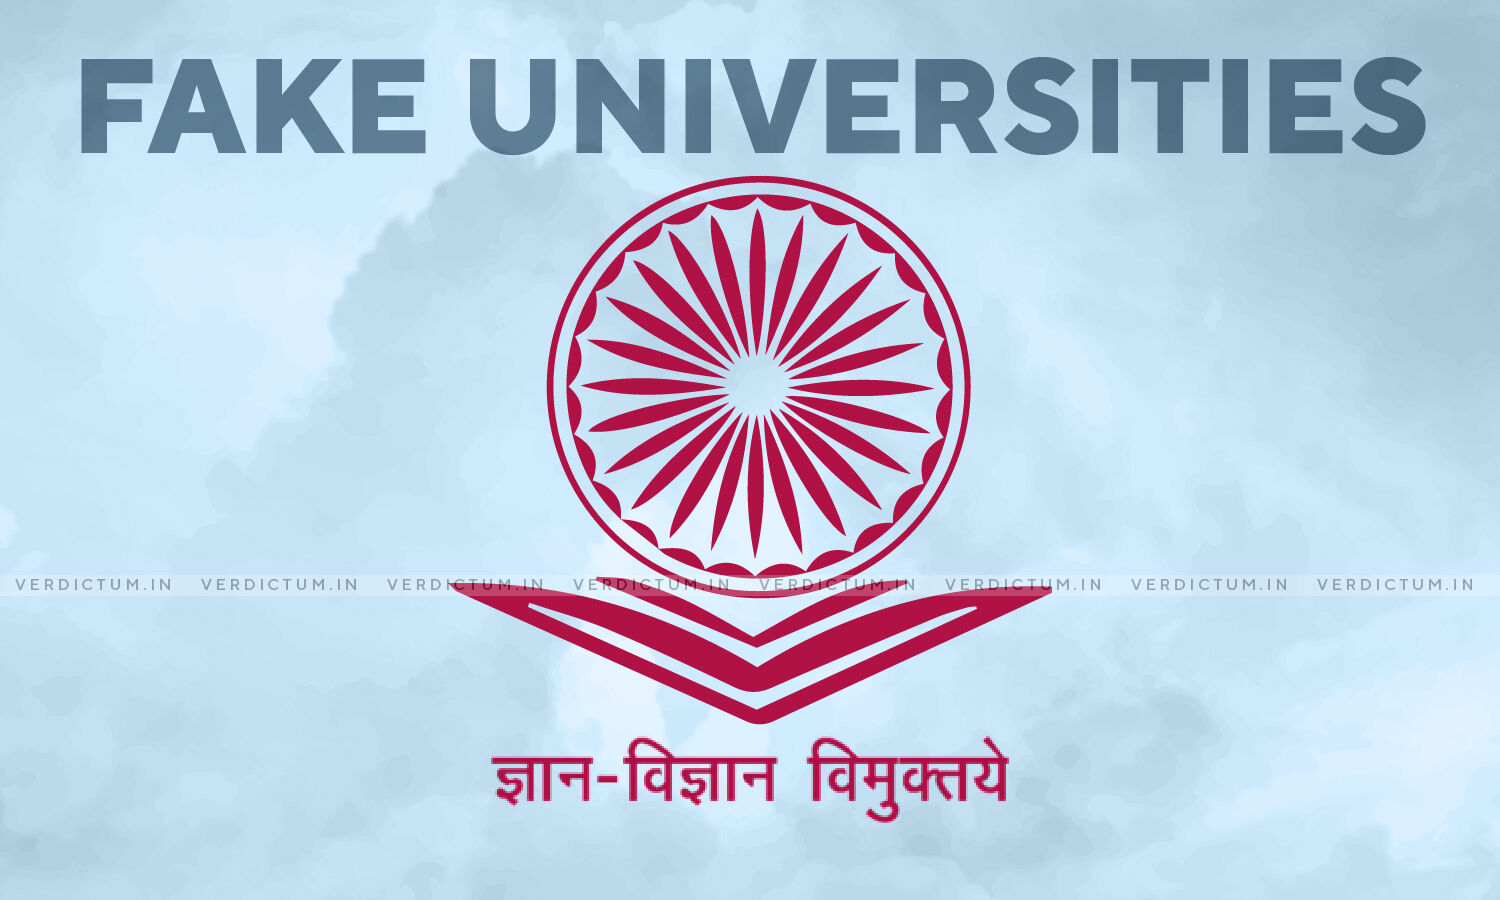 UGC announced new rules regarding higher education